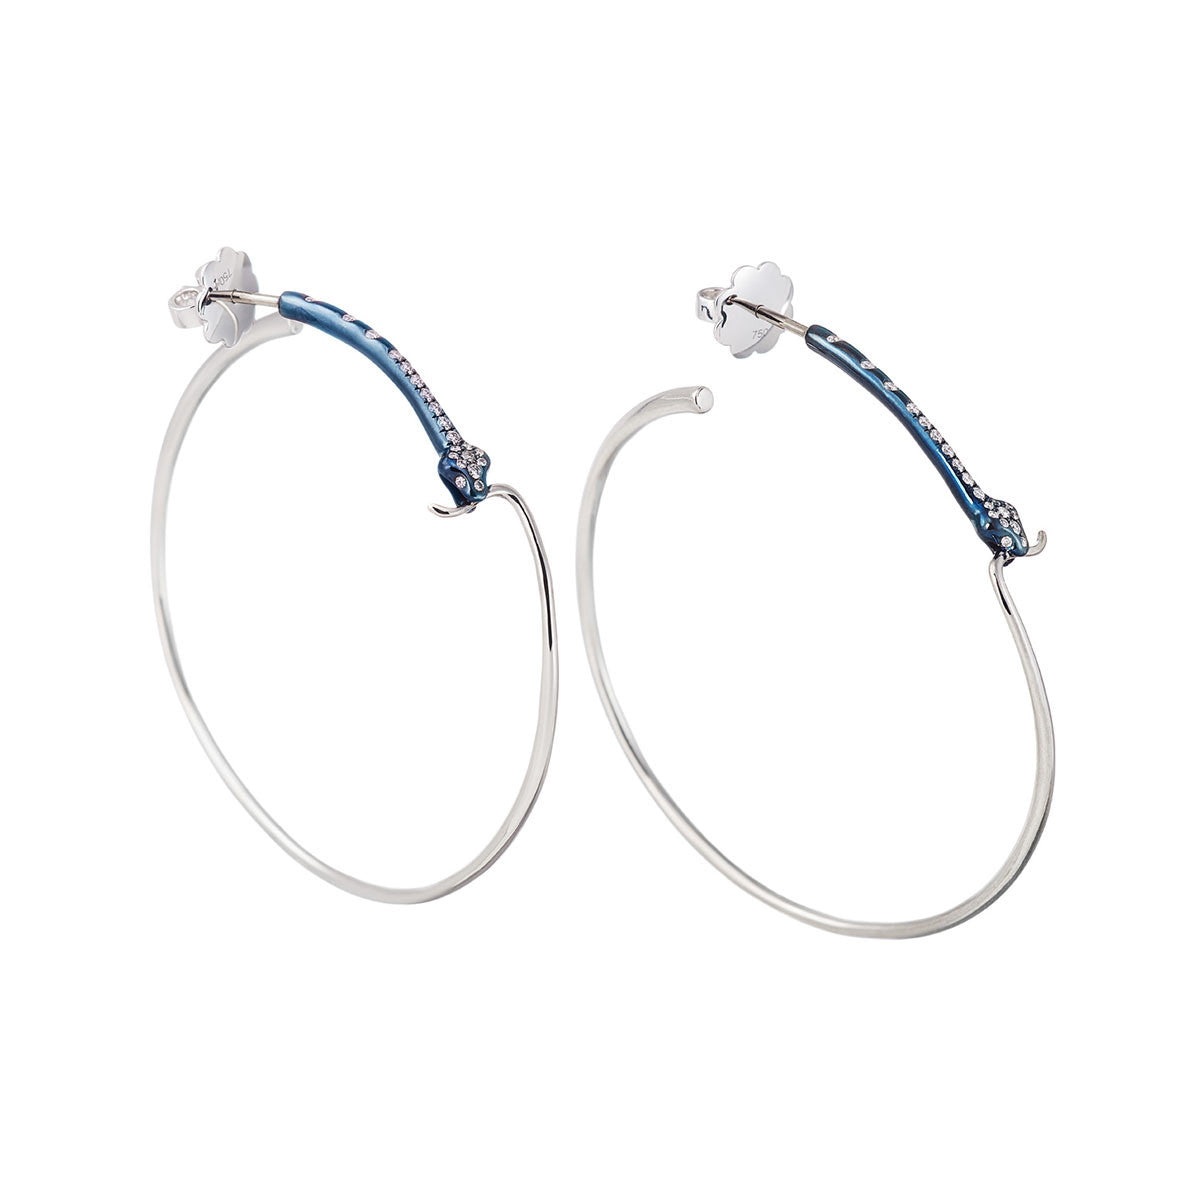 Earrings "Creoles" Palladium with Blue Rhodium and Wite Diamonds